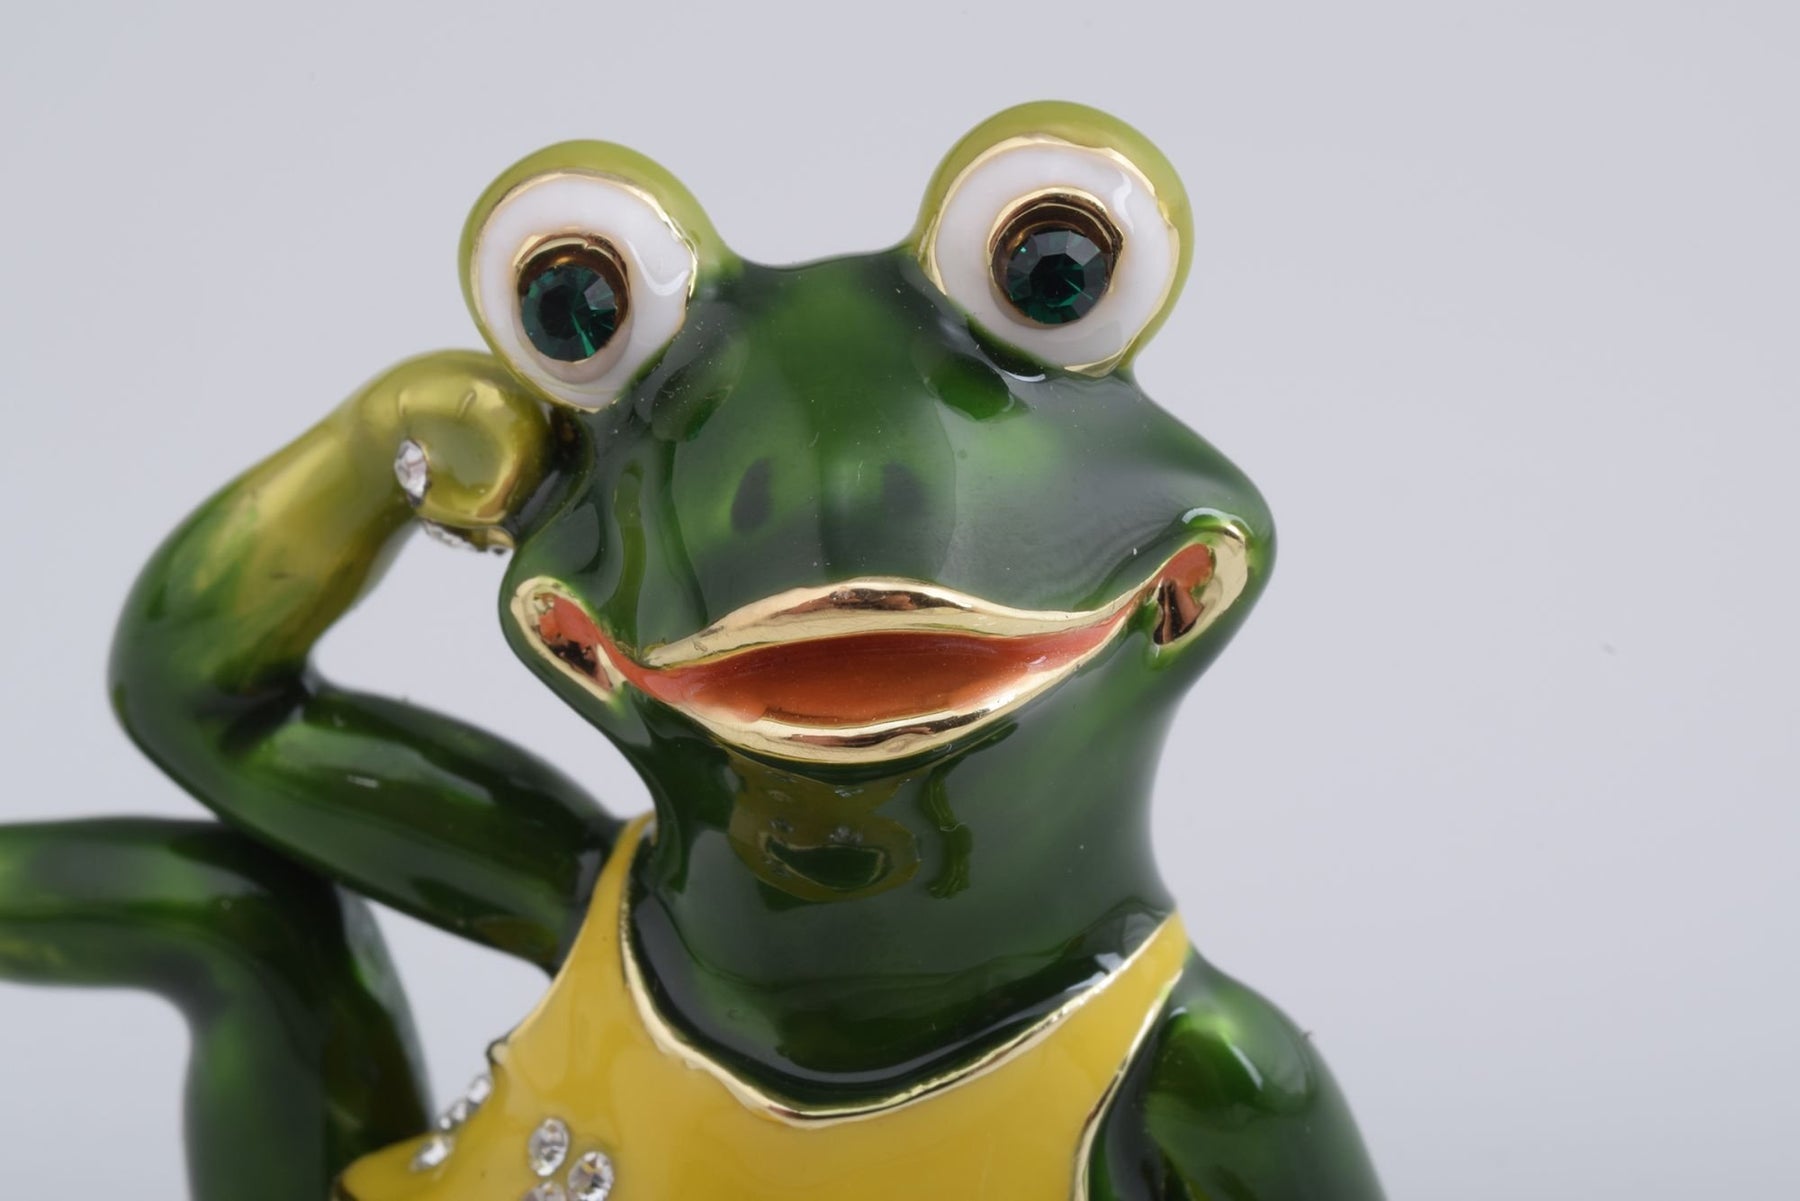 Keren Kopal Gymnastic Frog with a Yellow Shirt  62.62